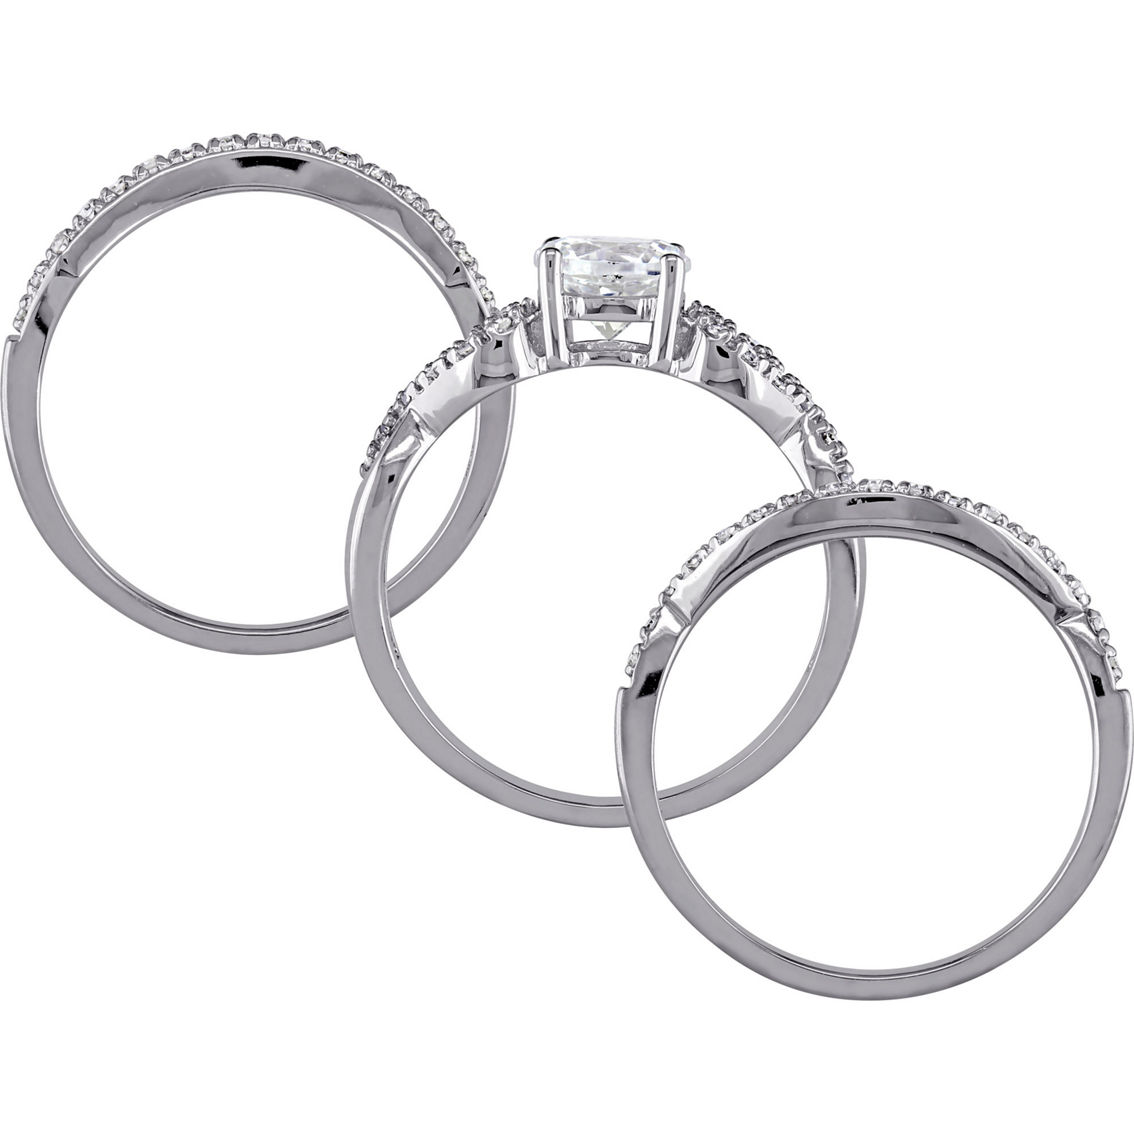 Sofia B. 10k White Gold Created White Sapphire Diamond Infinity 3 pc. Bridal Set - Image 3 of 5